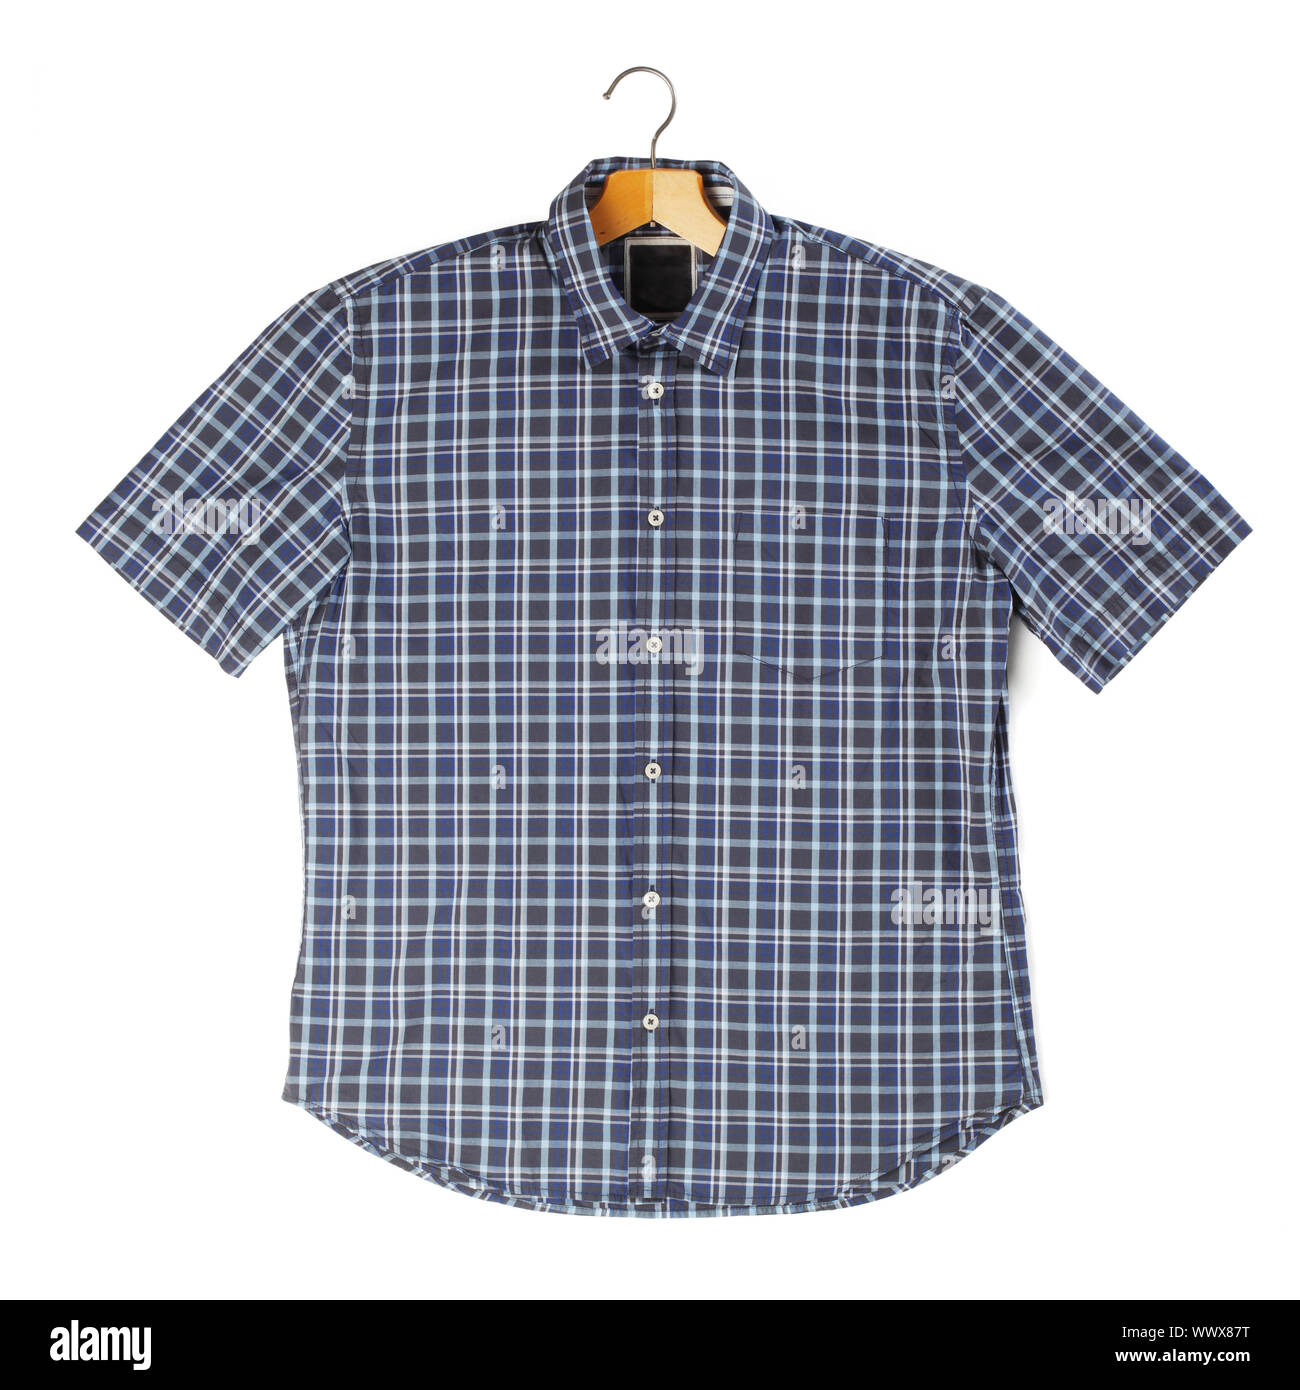 Men's short sleeved plaid cotton shirt on a hanger Stock Photo - Alamy